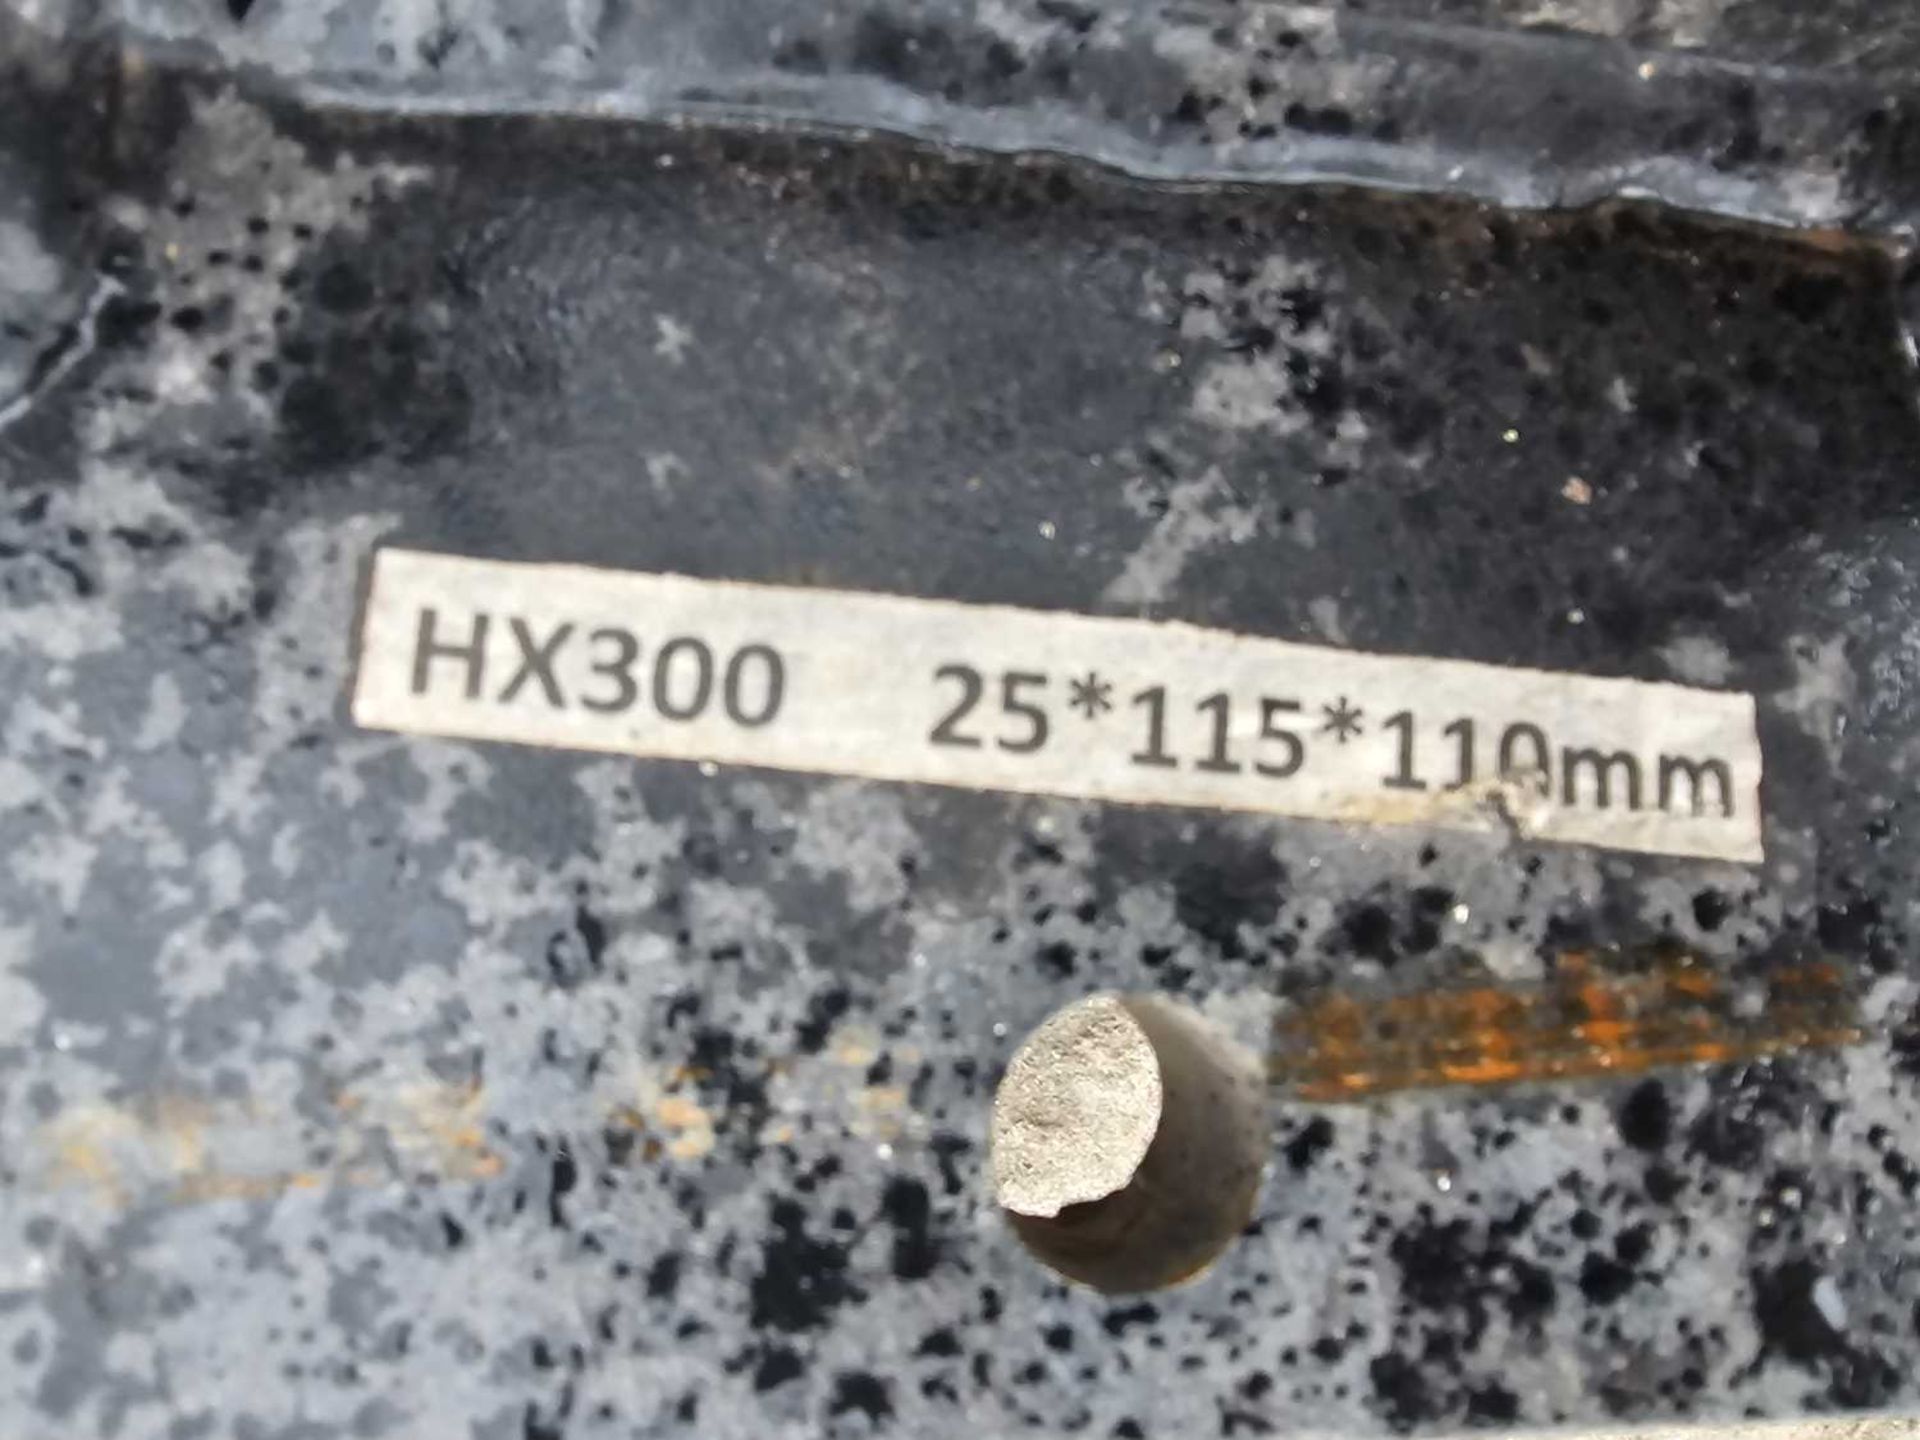 Unused Haner HX300 Headstock 25mm Pin to suit Hydraulic Breaker - Image 3 of 3